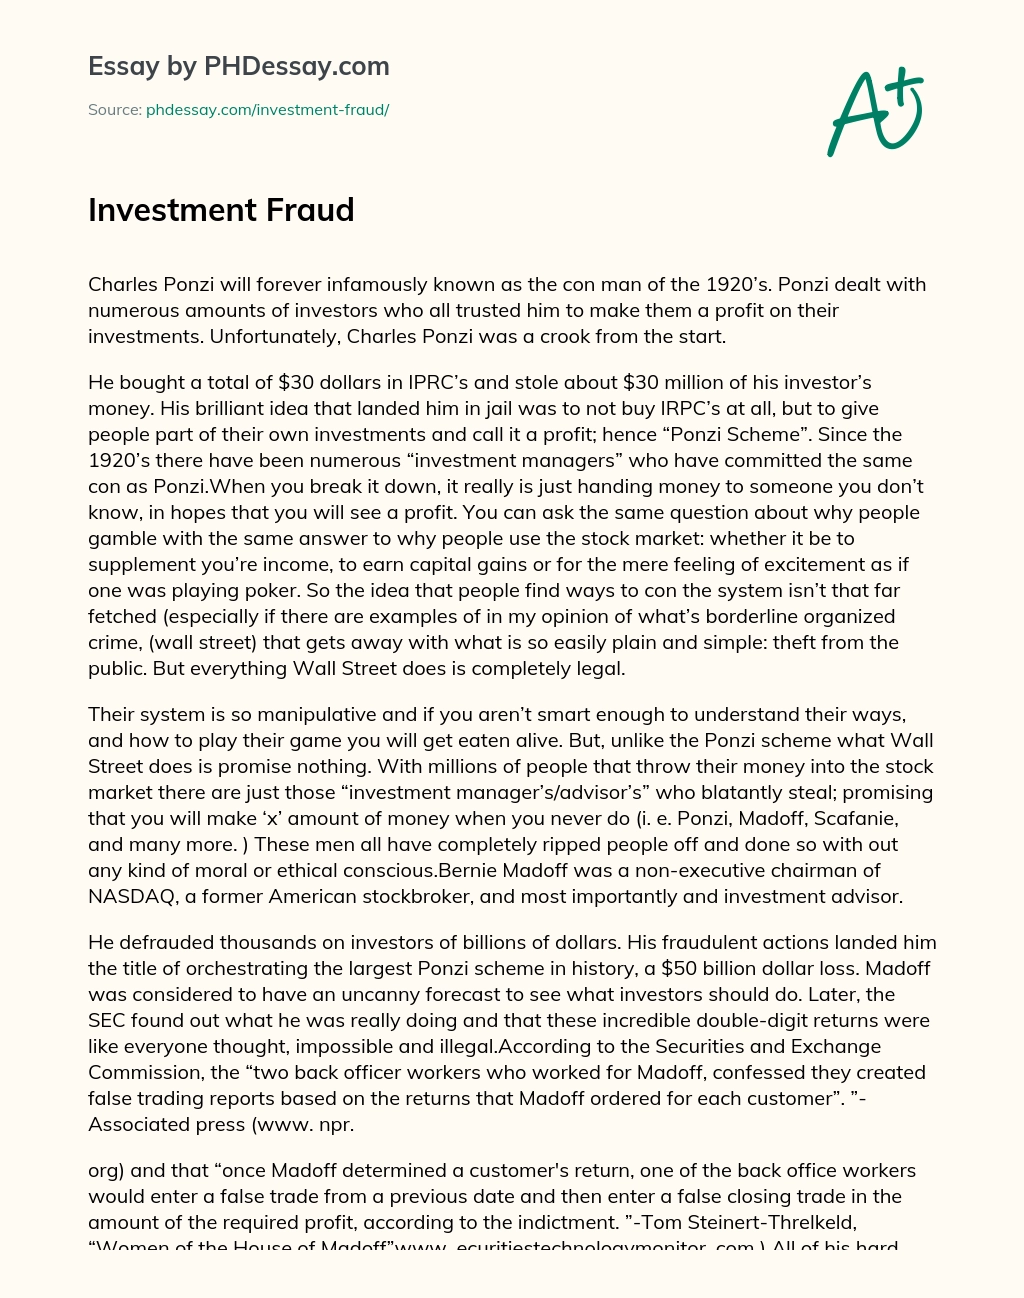 Investment Fraud essay